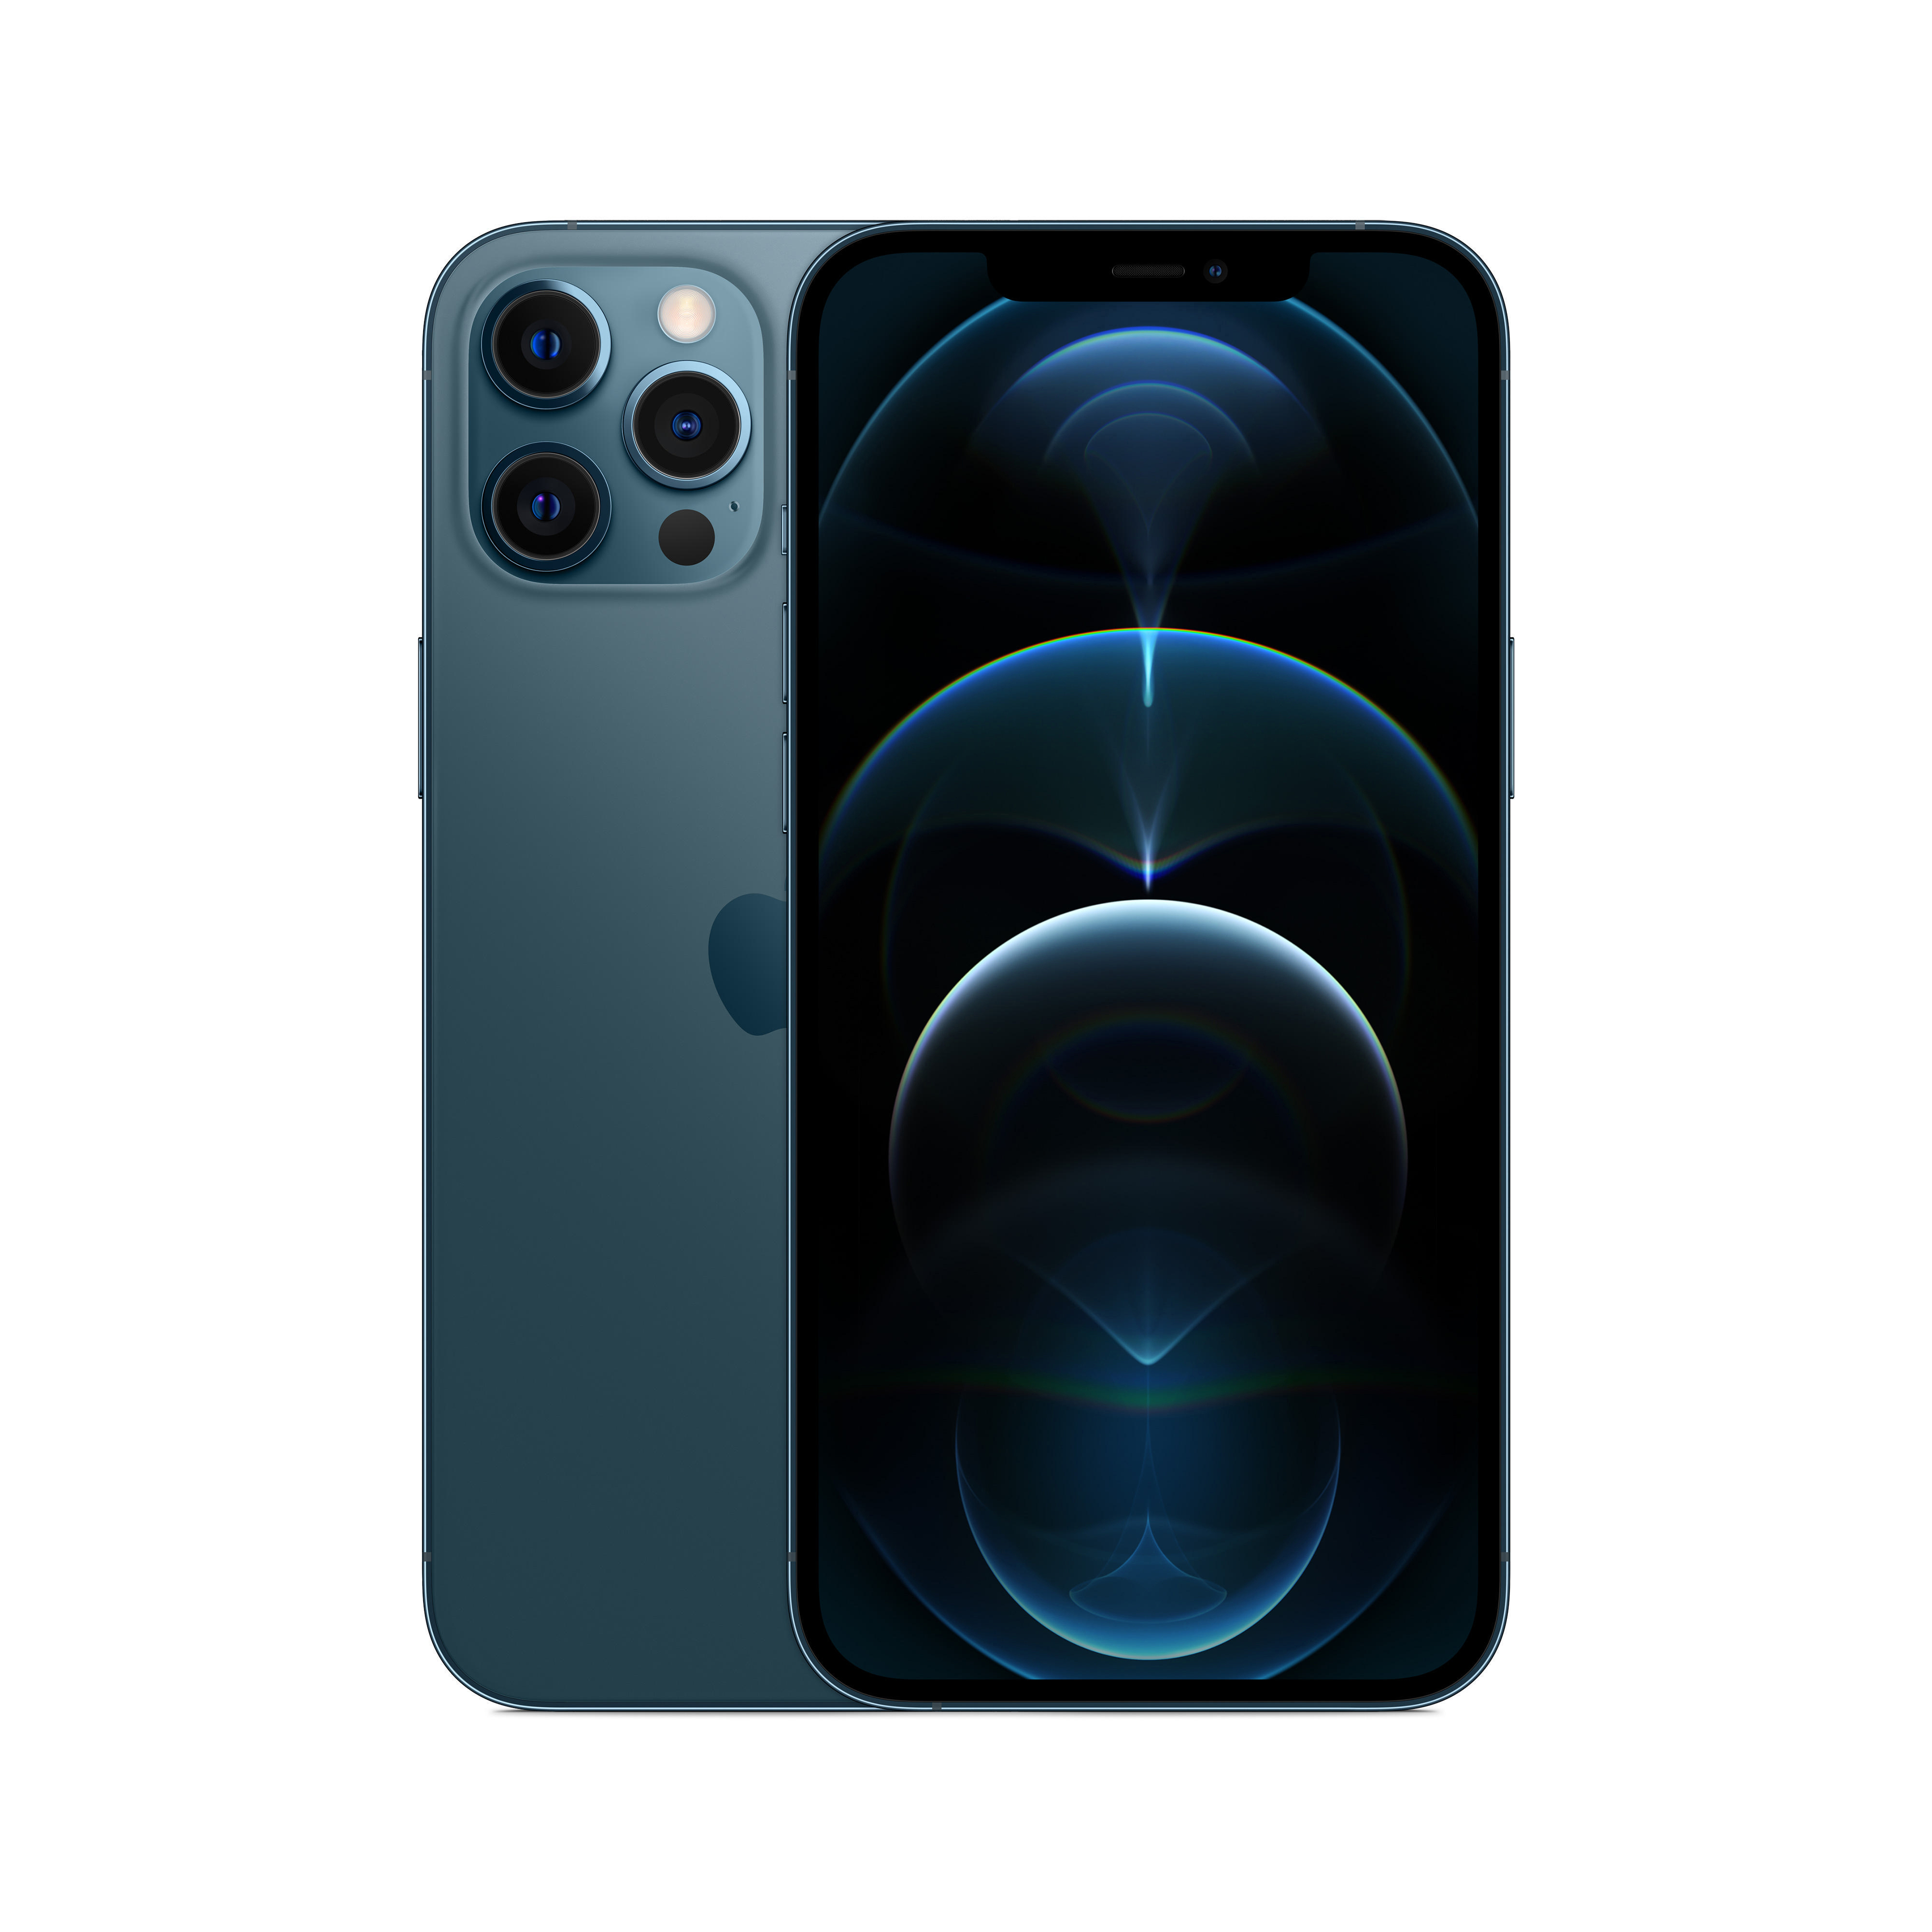 APPLE iPhone 12 Pro Max SIM GB 256 Pazifikblau Dual